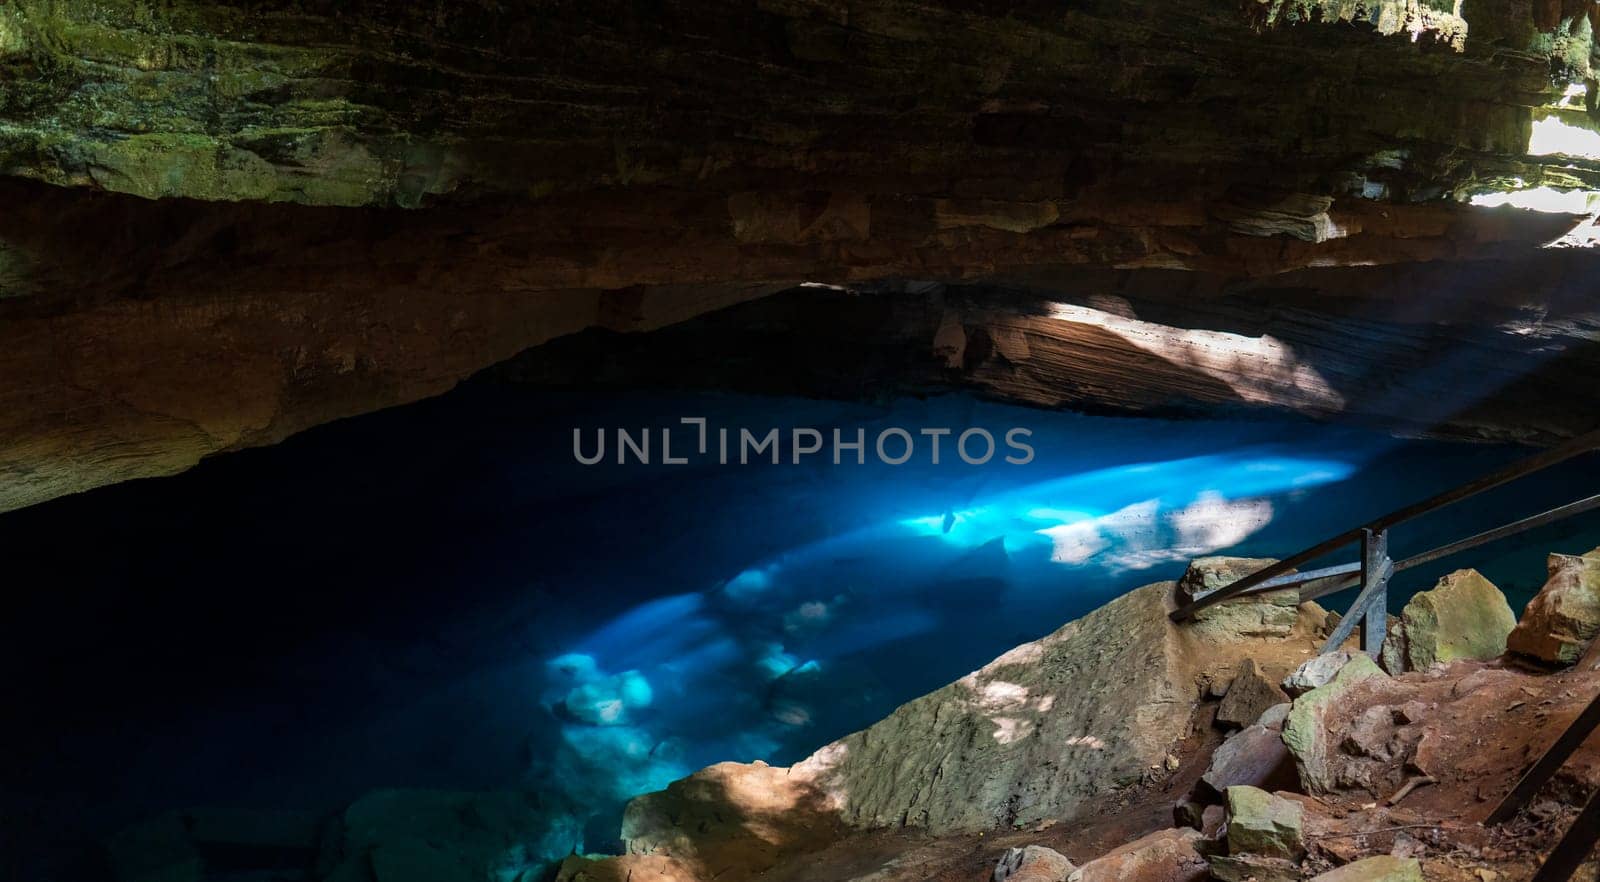 Ethereal Blue Light Shining Through a Serene Cave by FerradalFCG